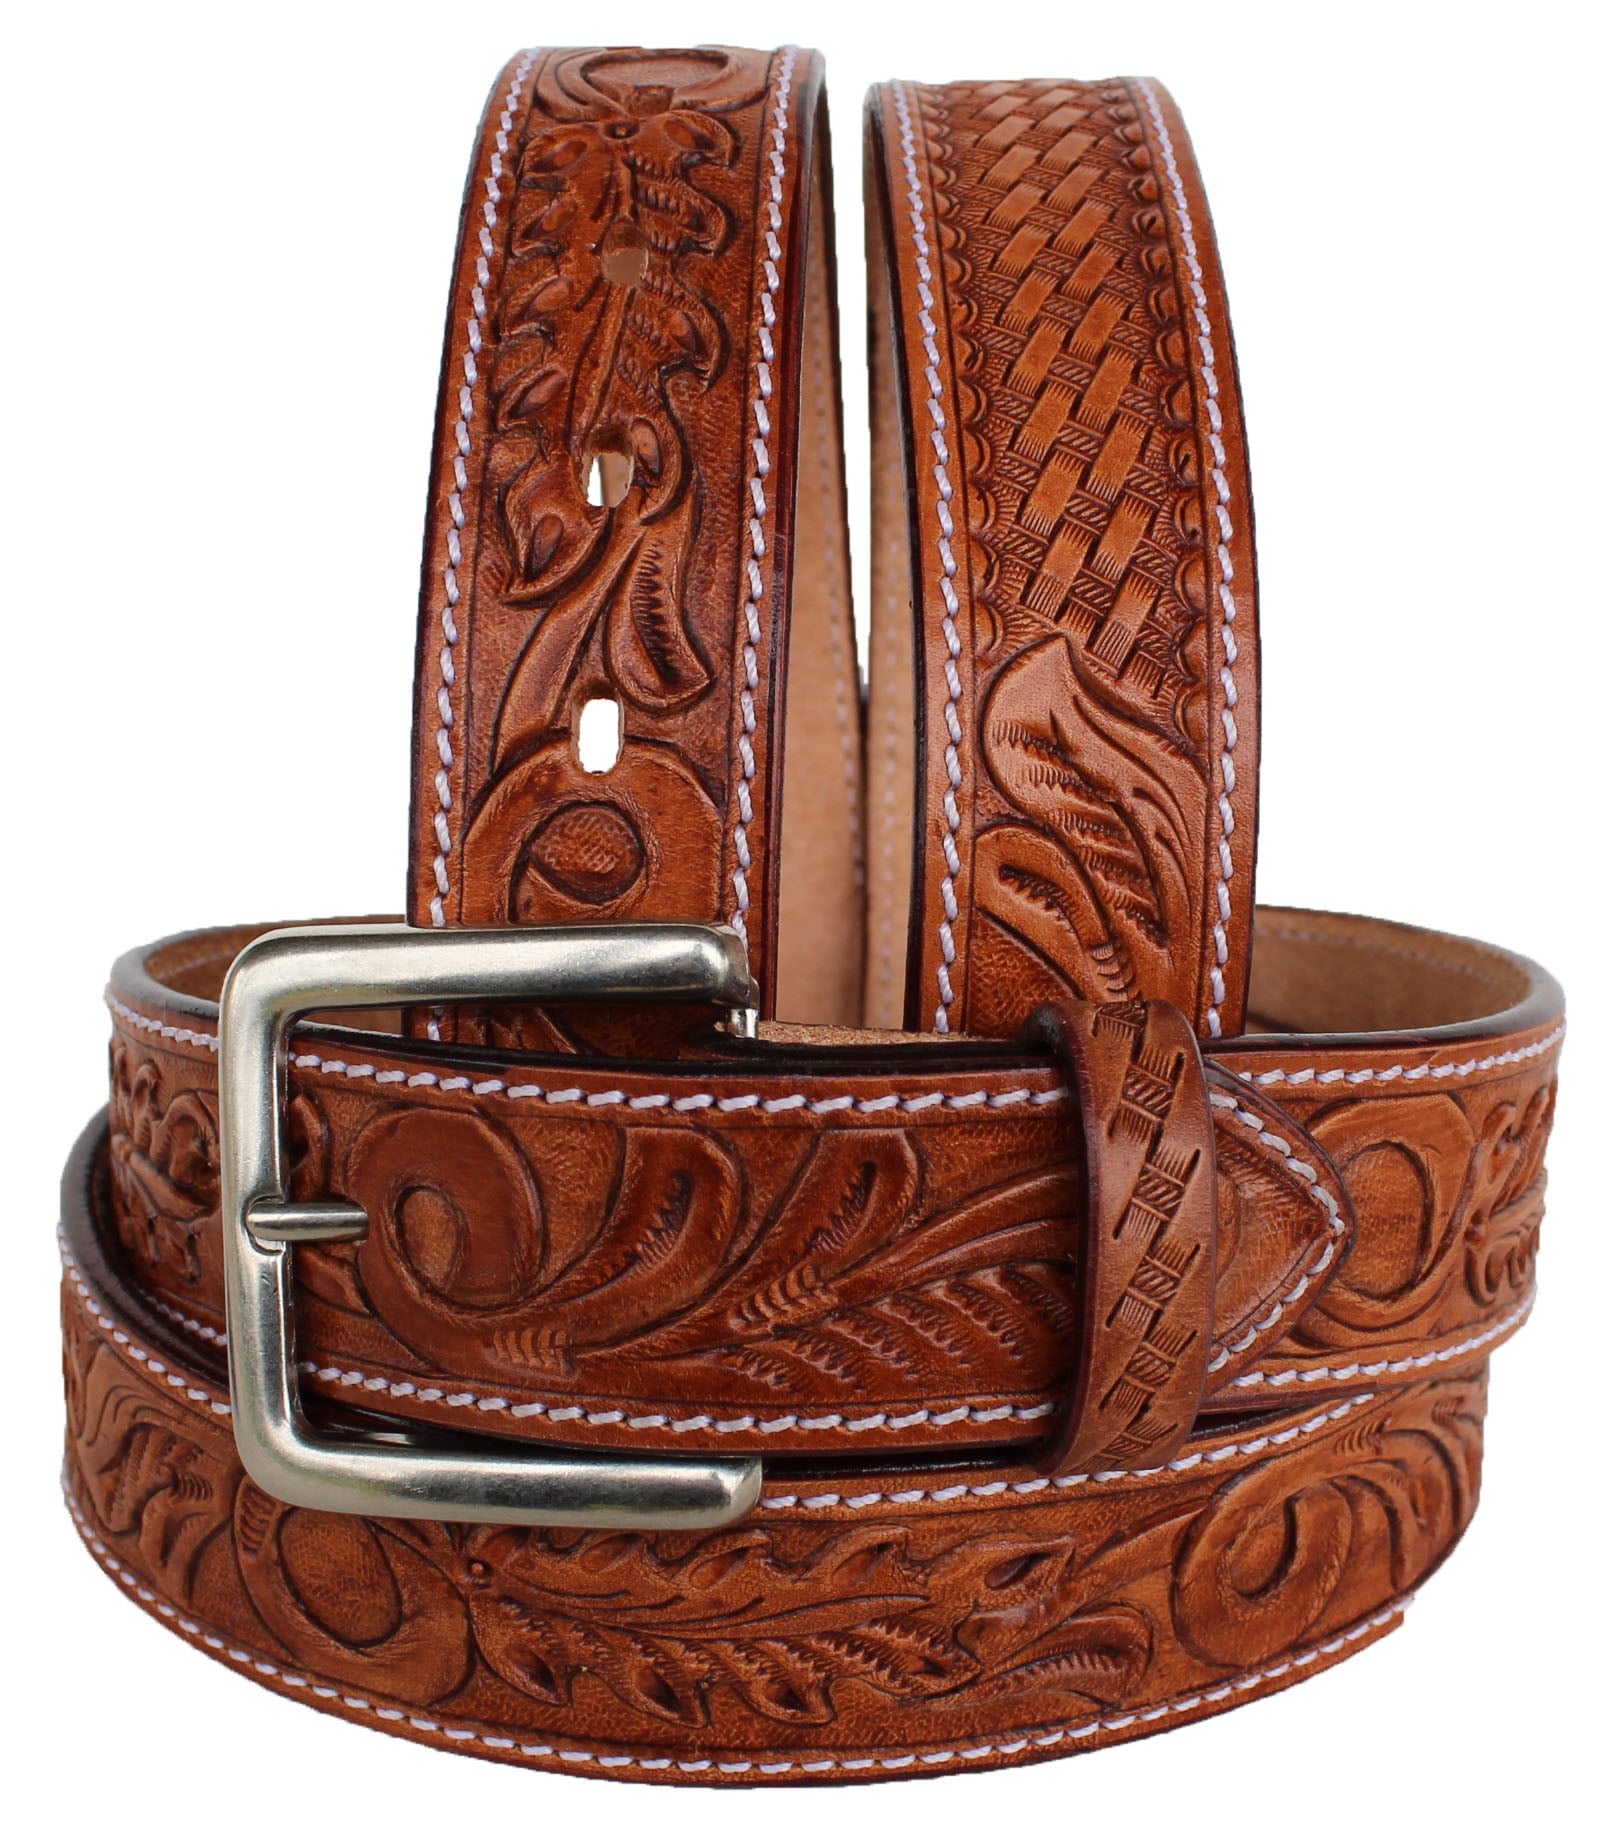 Unisex Western Rodeo Cowhide Brown Leather Cowboy Belt Buckle 1 1/2" Wide asst 